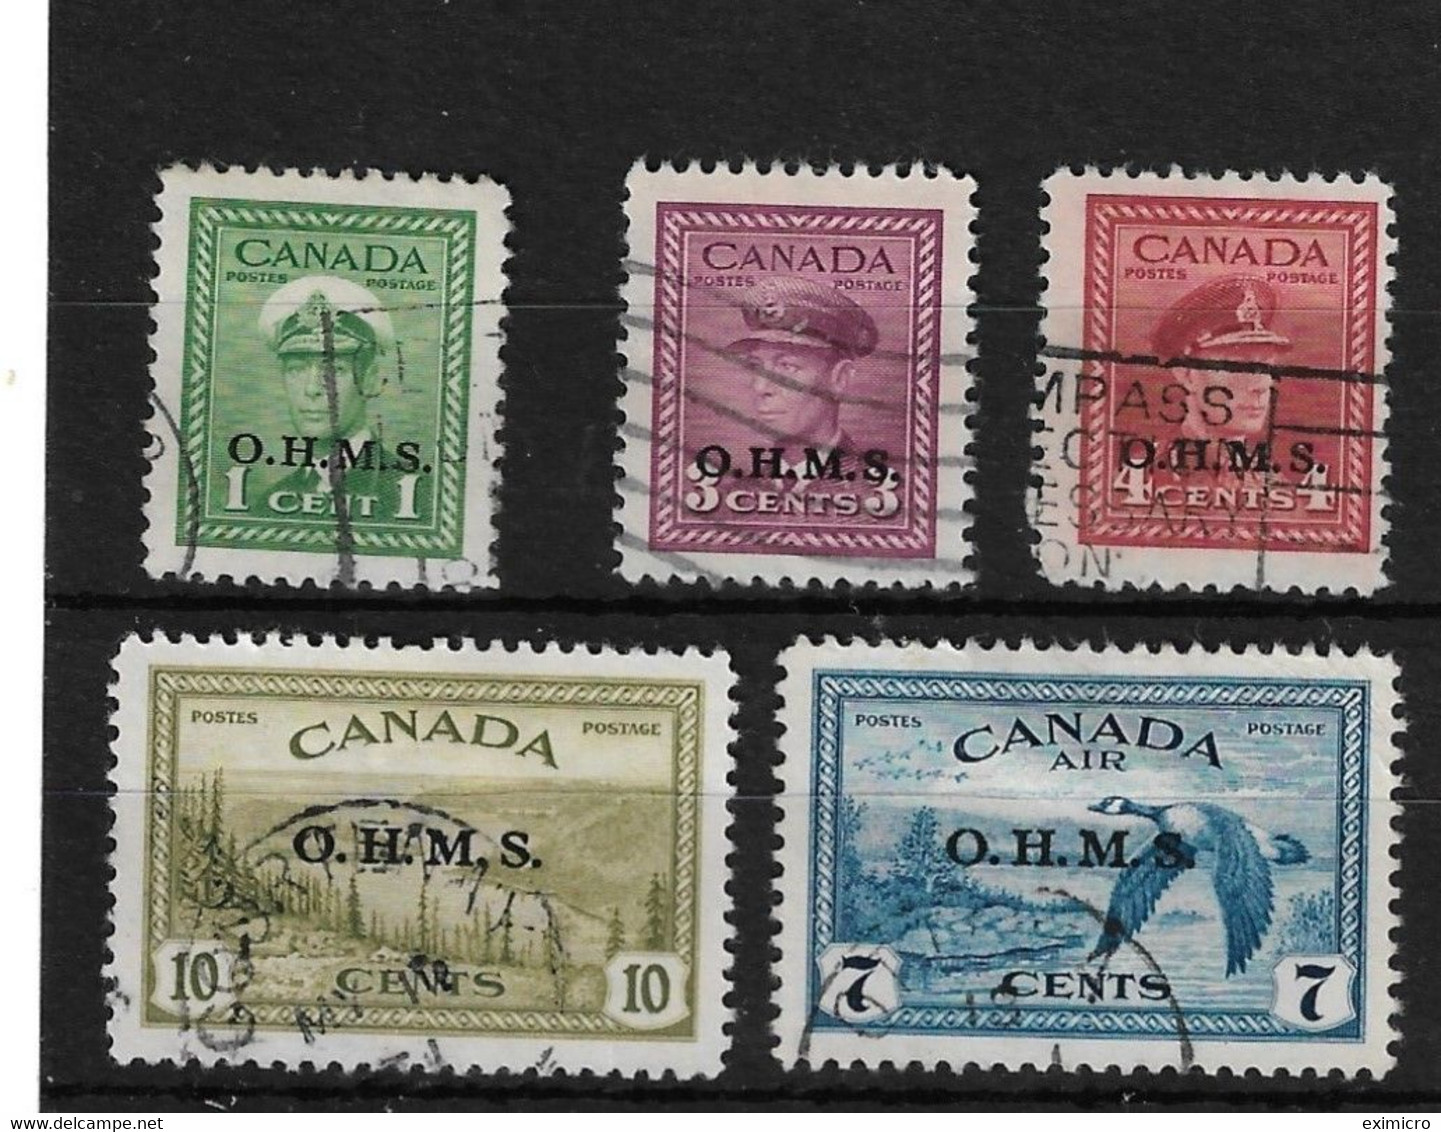 CANADA 1949 O.H.M.S. OFFICIALS SG O162, O164 - O166, O171 FINE USED Cat £40+ - Sobrecargados